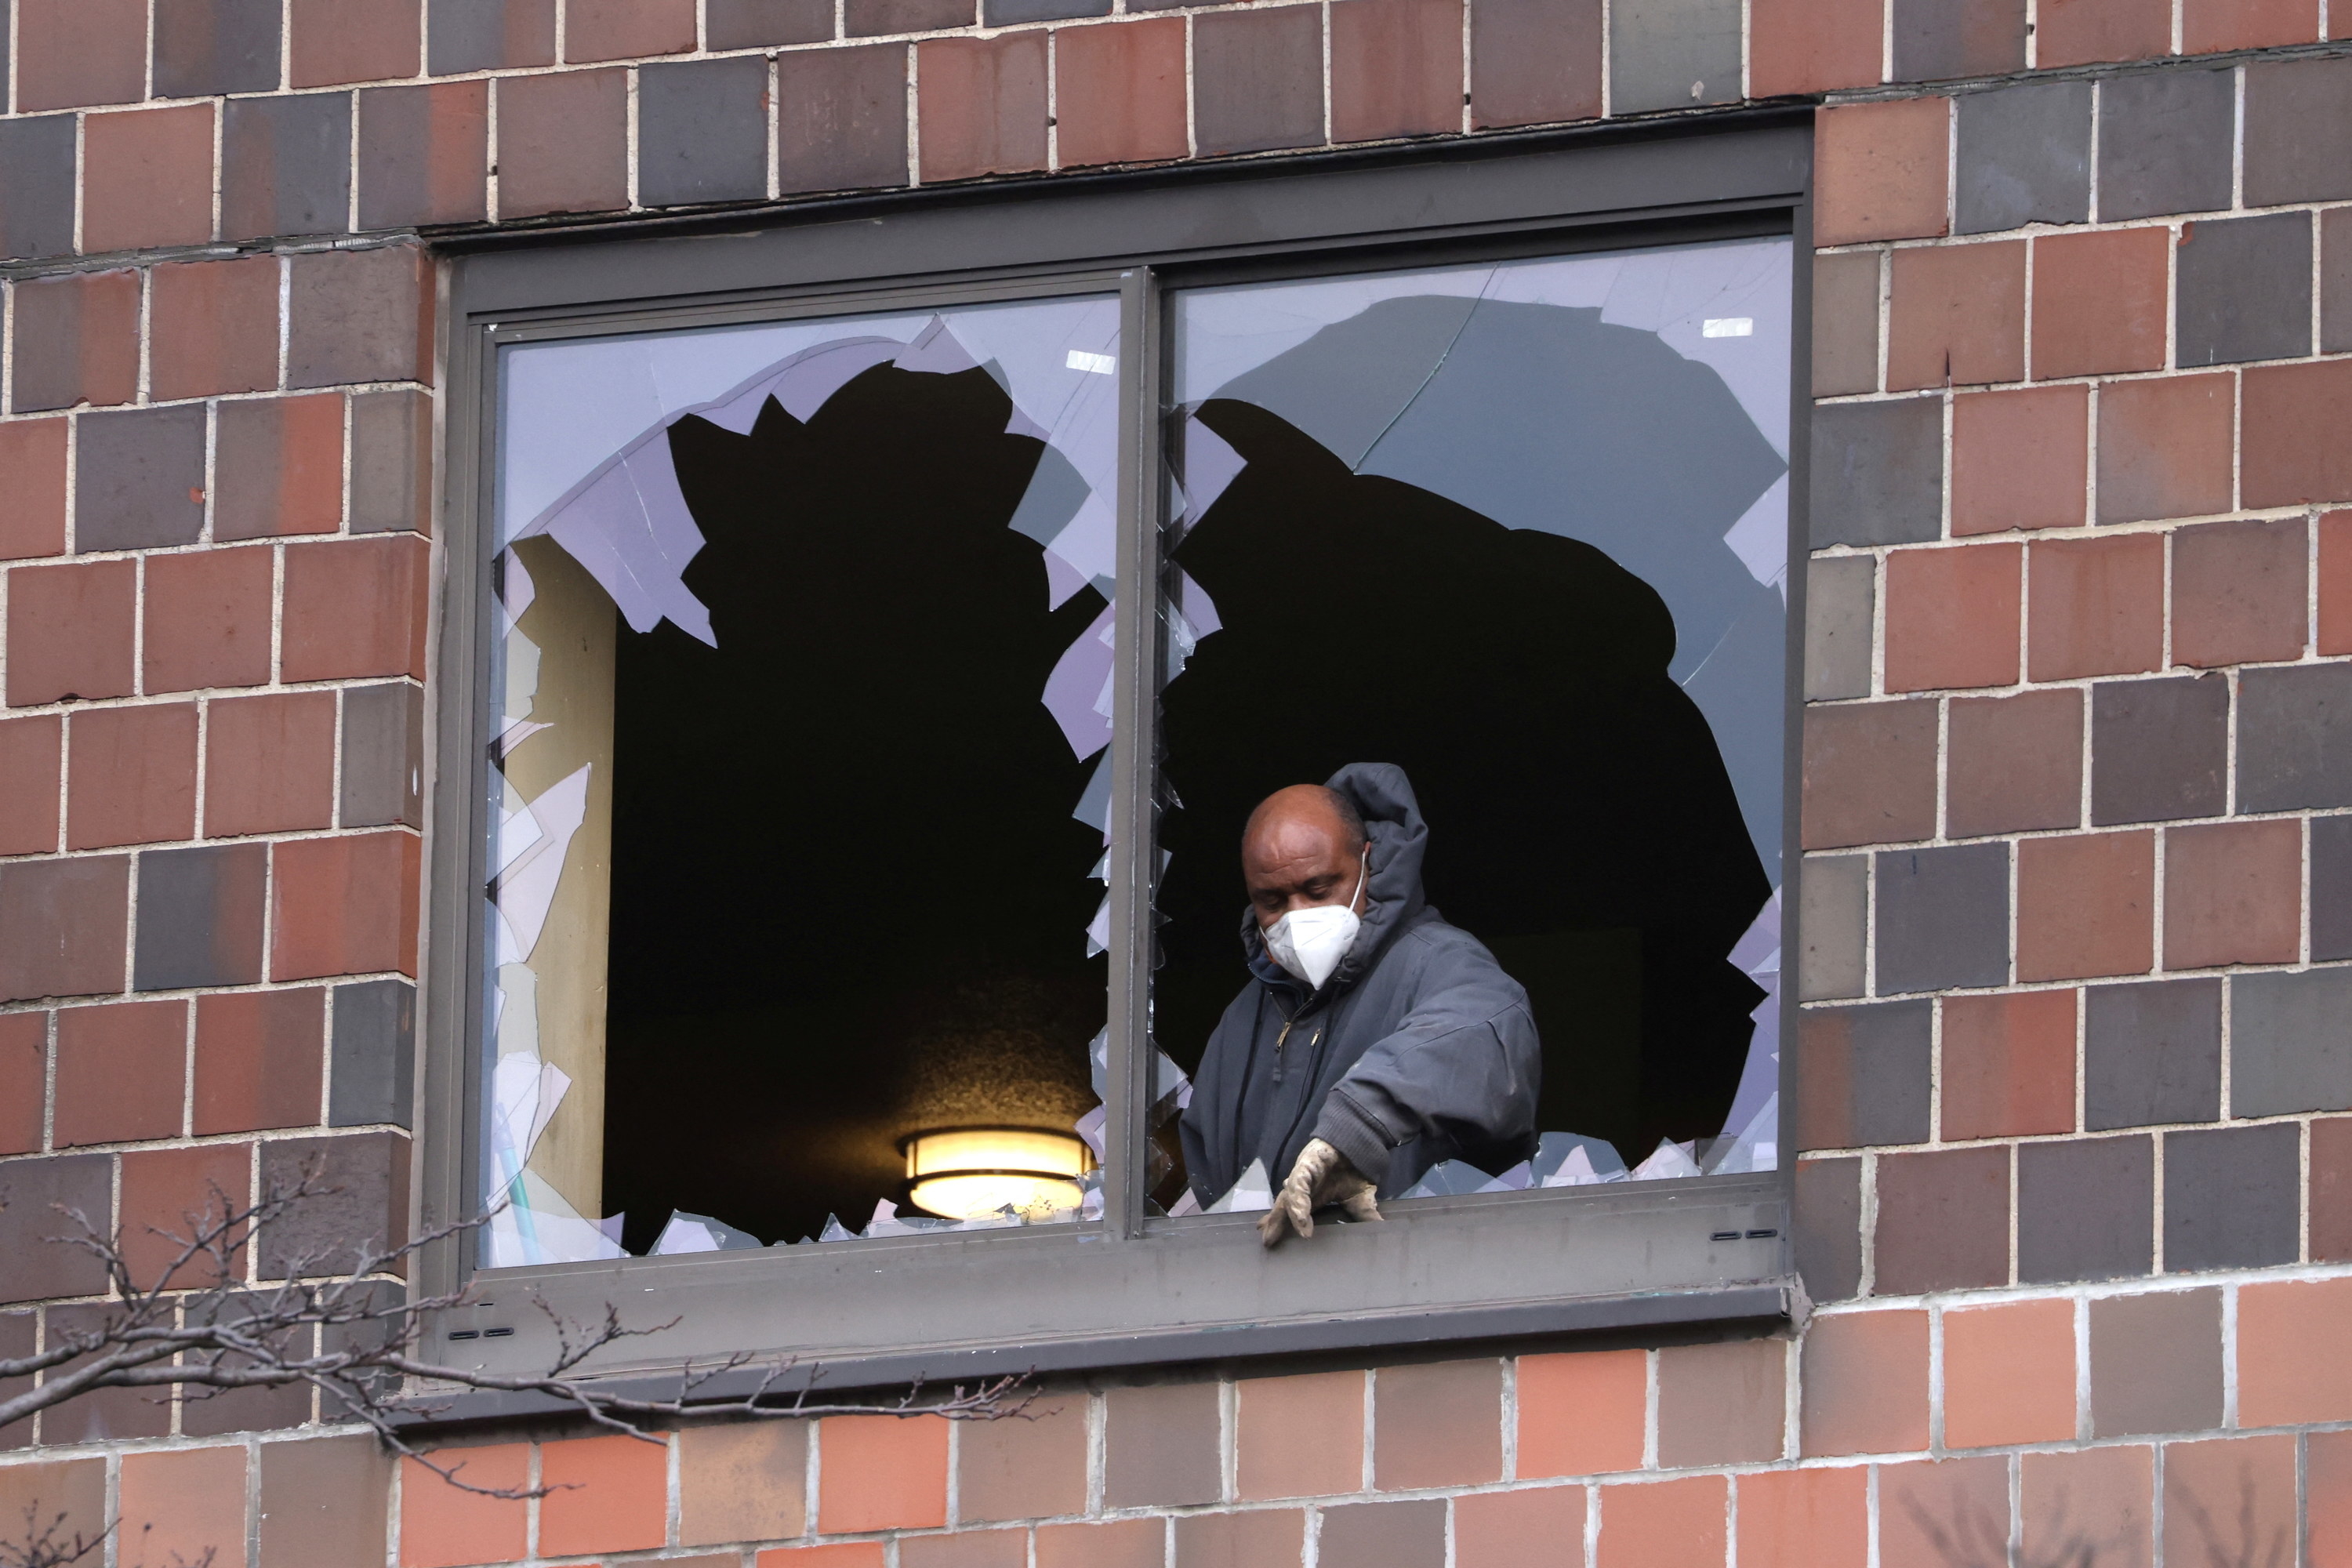 A man wearing gloves stands inside a building behind broken windows